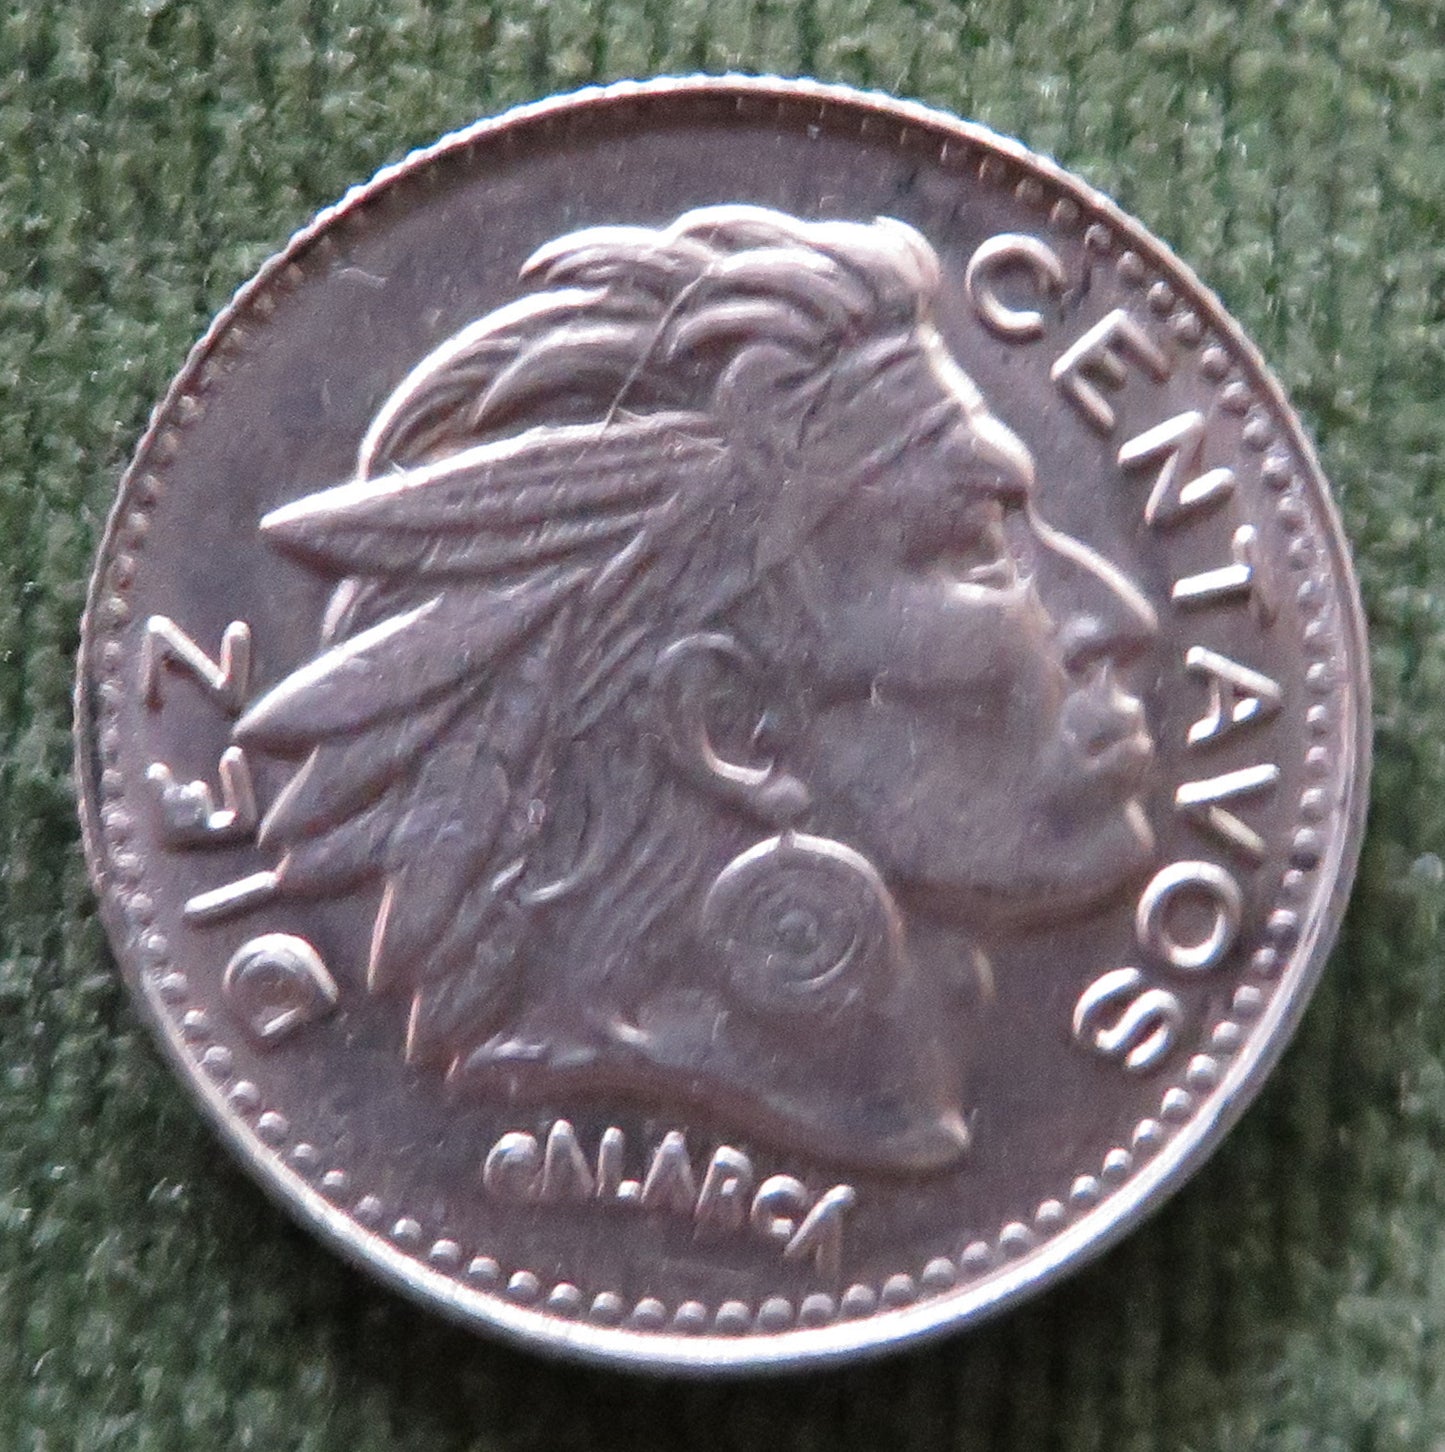 Columbia 1956 10 Centavos Coin - EF